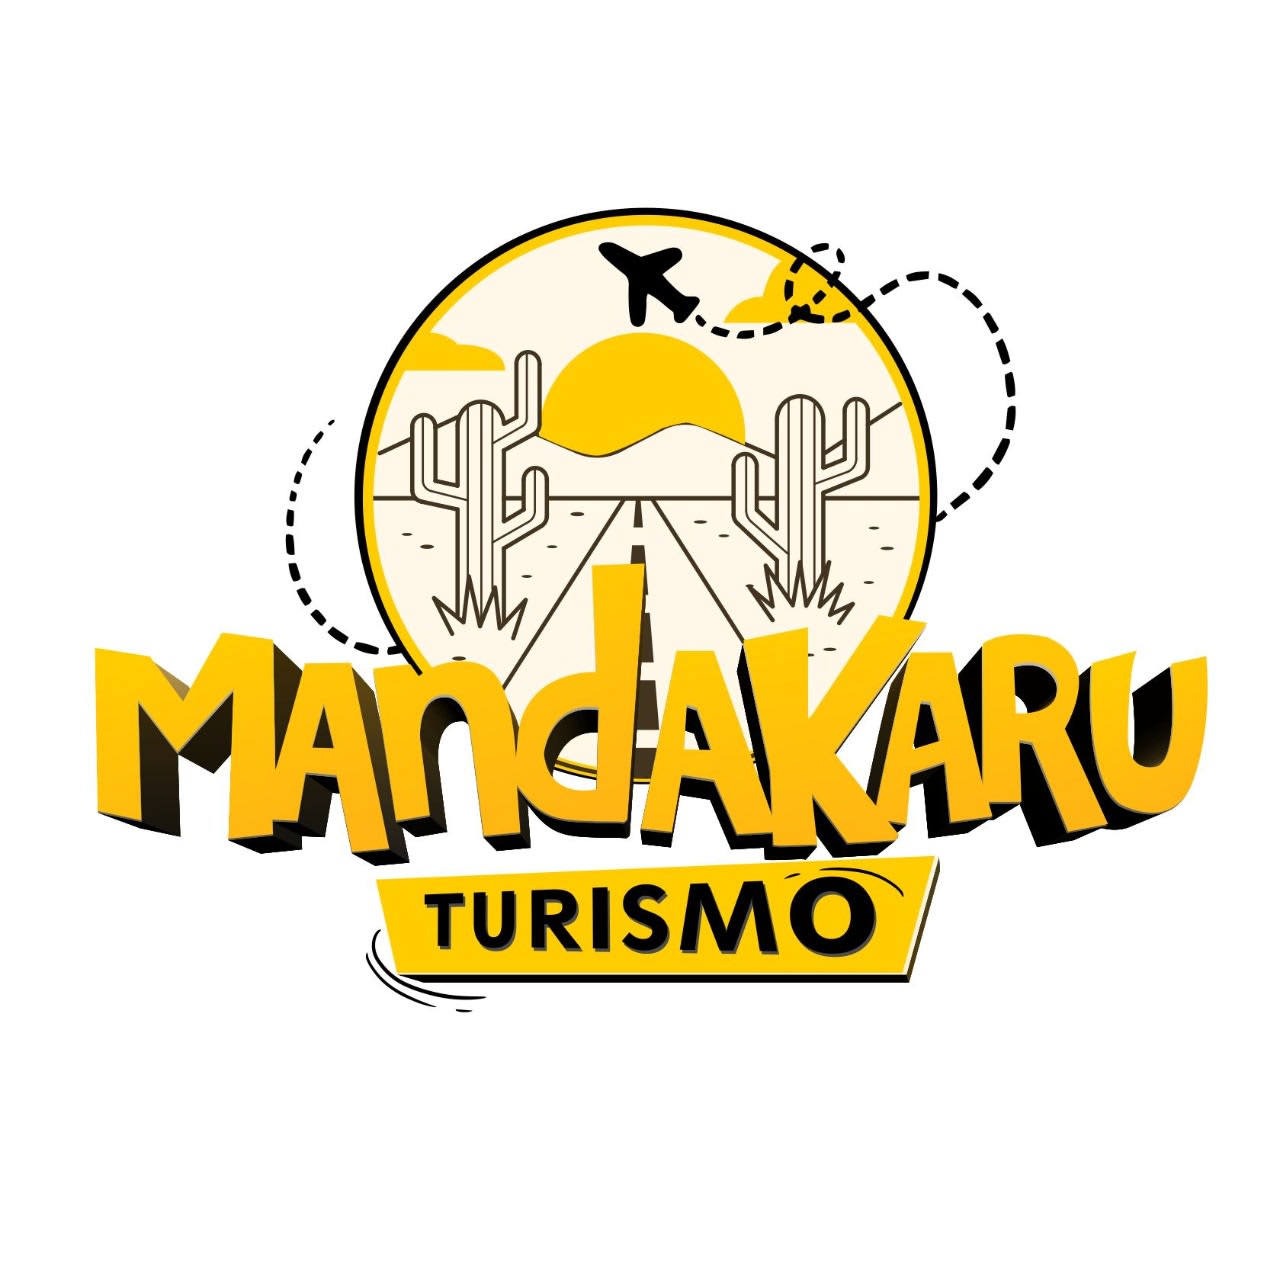 Mandakaru Turismo